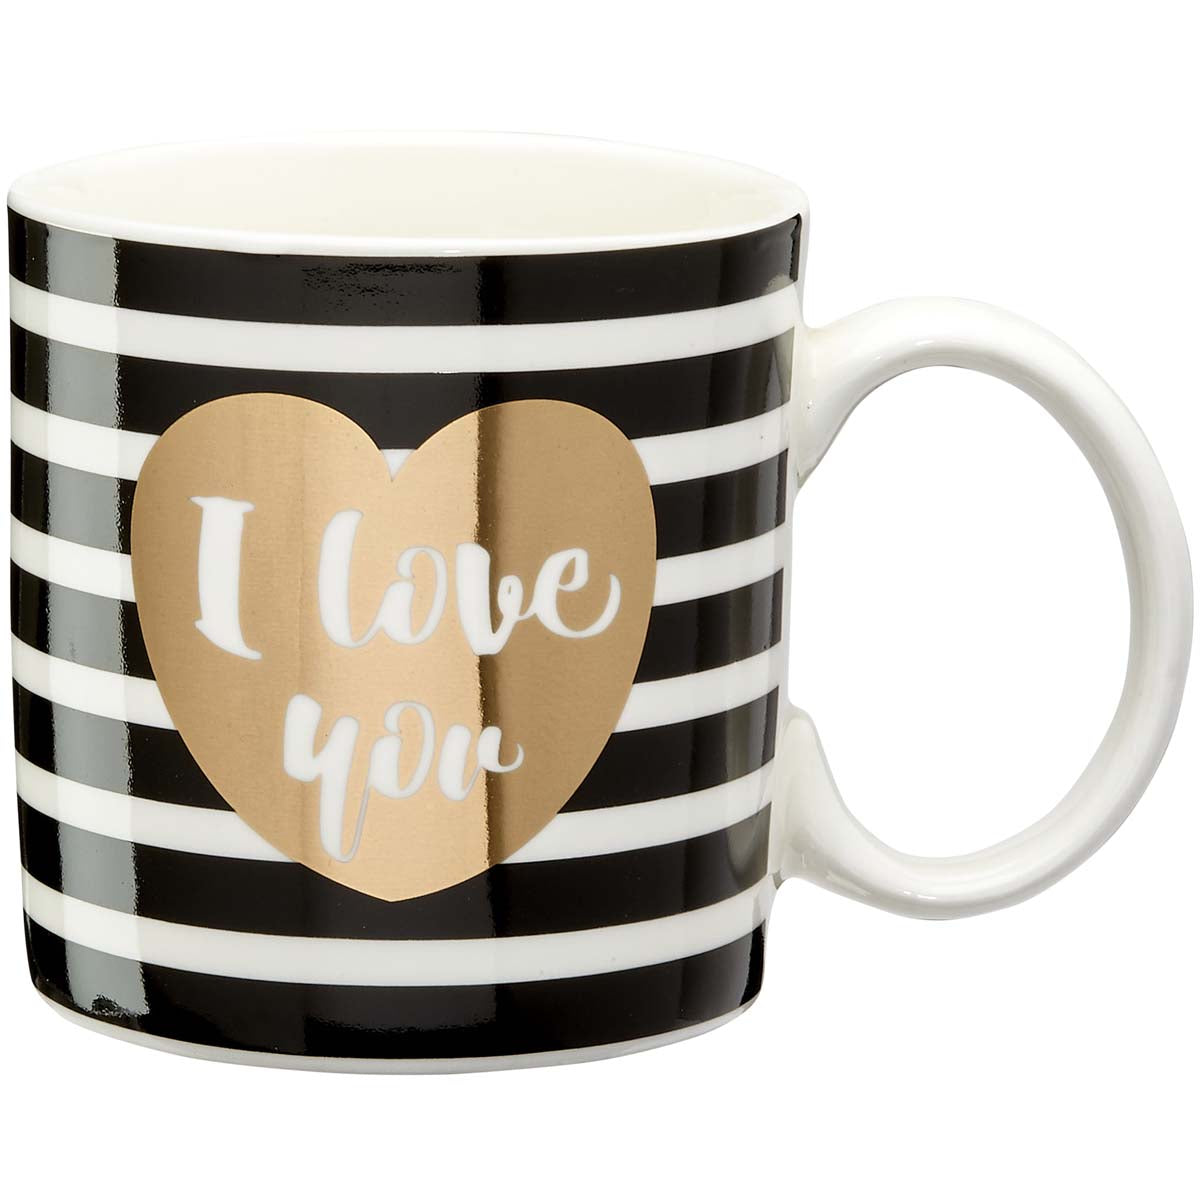 I love you gift mug